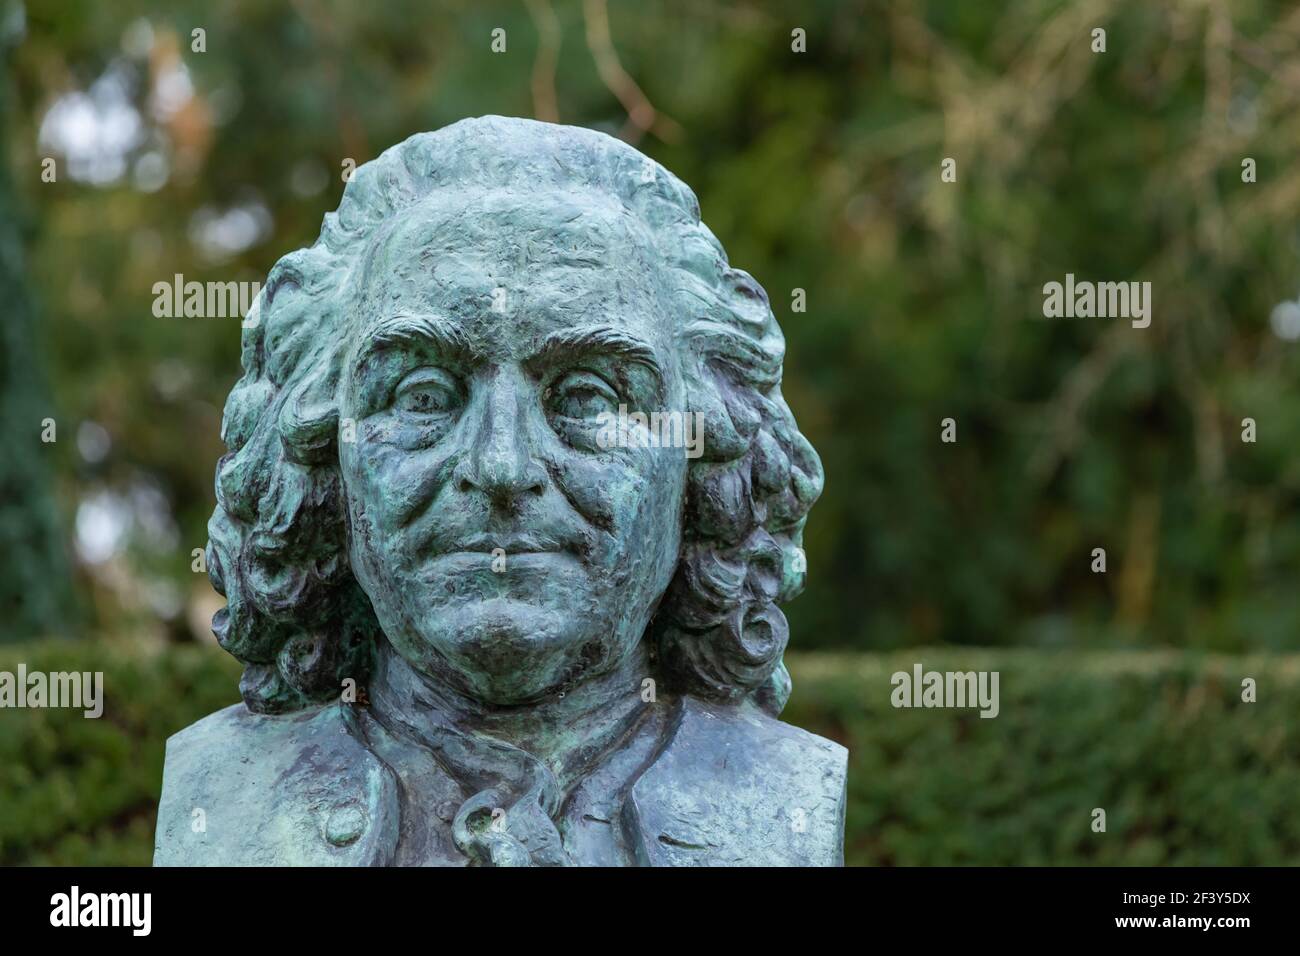 Sculpture of Carl Linnaeus in a public park Stock Photo